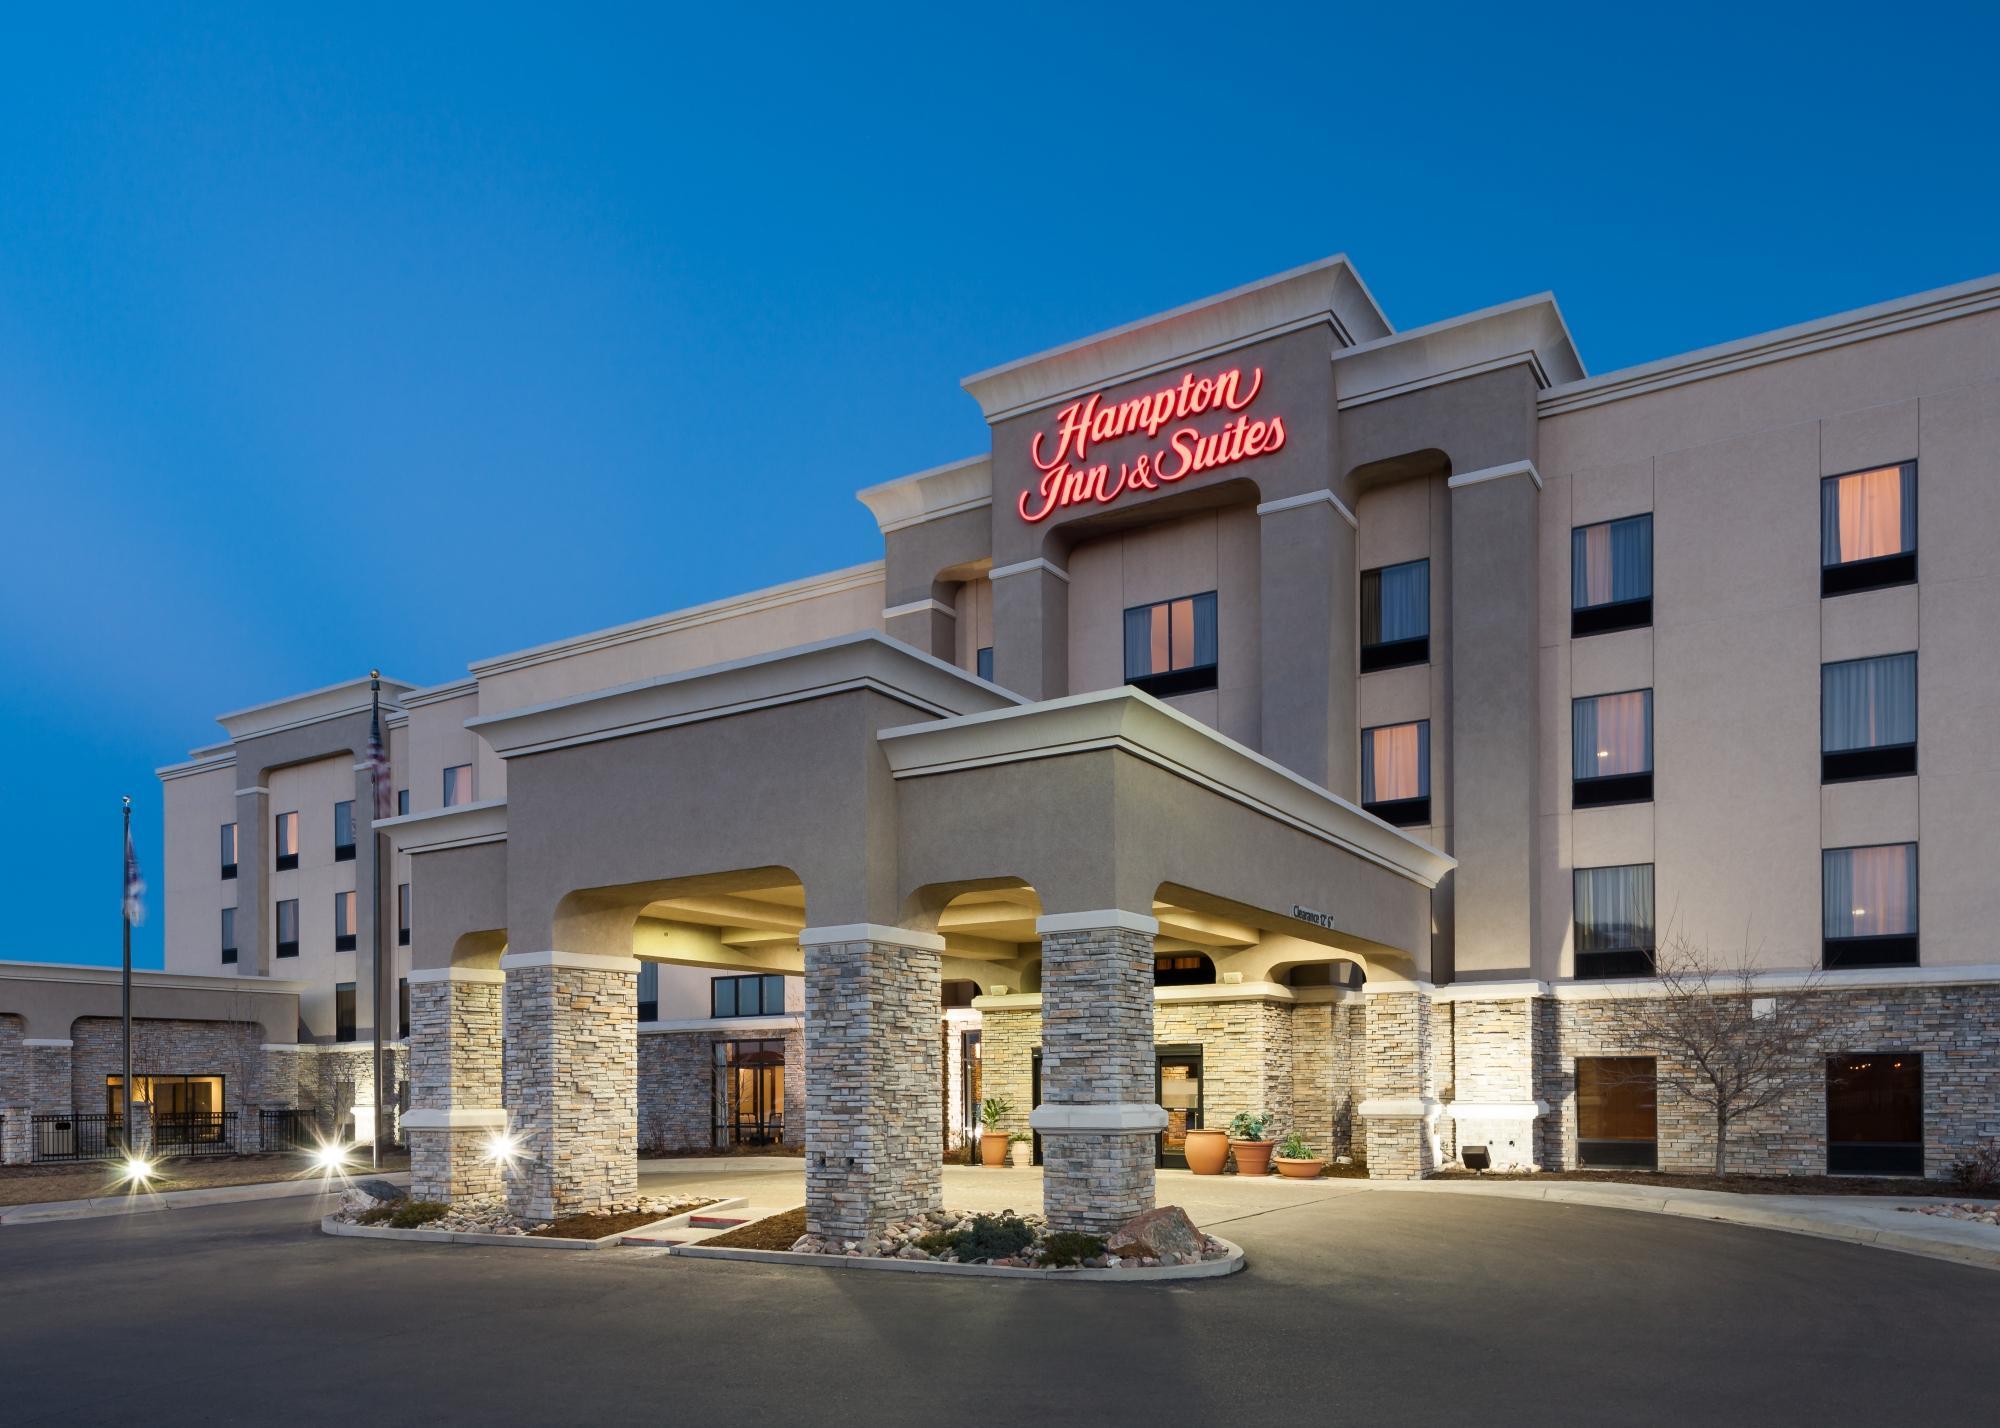 Photo of Hampton Inn & Suites Colorado Springs/I-25 South, Colorado Springs, CO